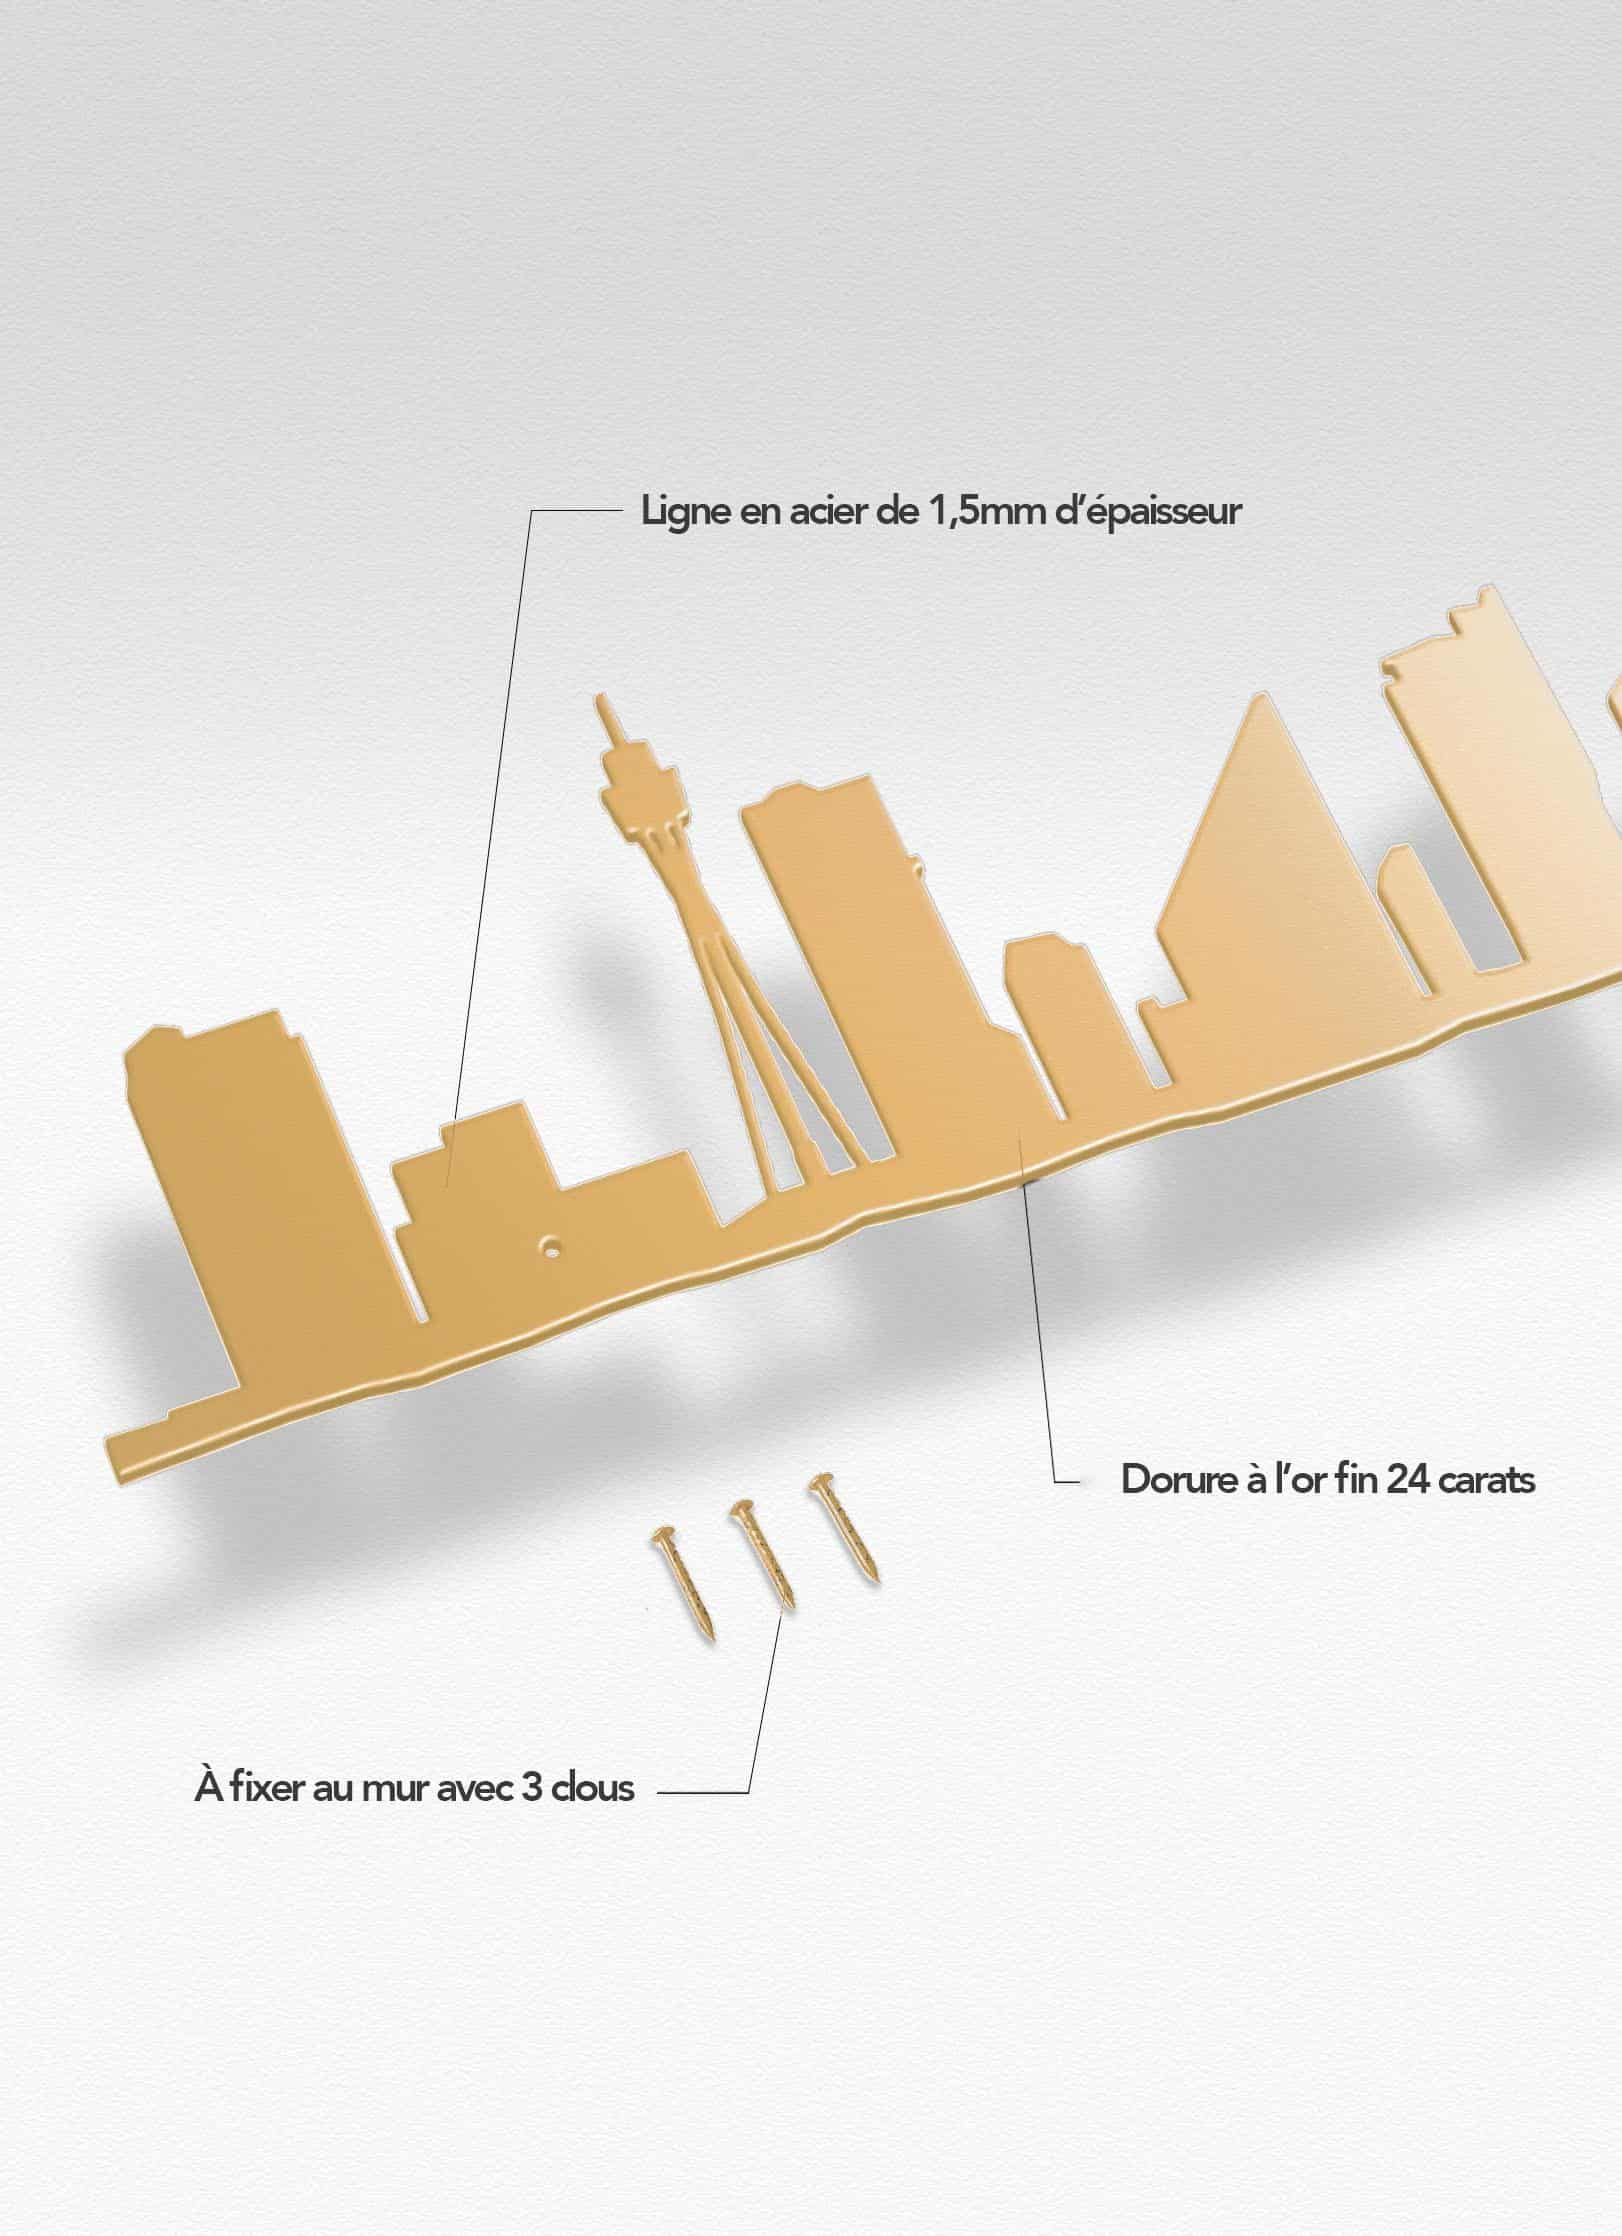 Presentation of the skyline of Sydney doré